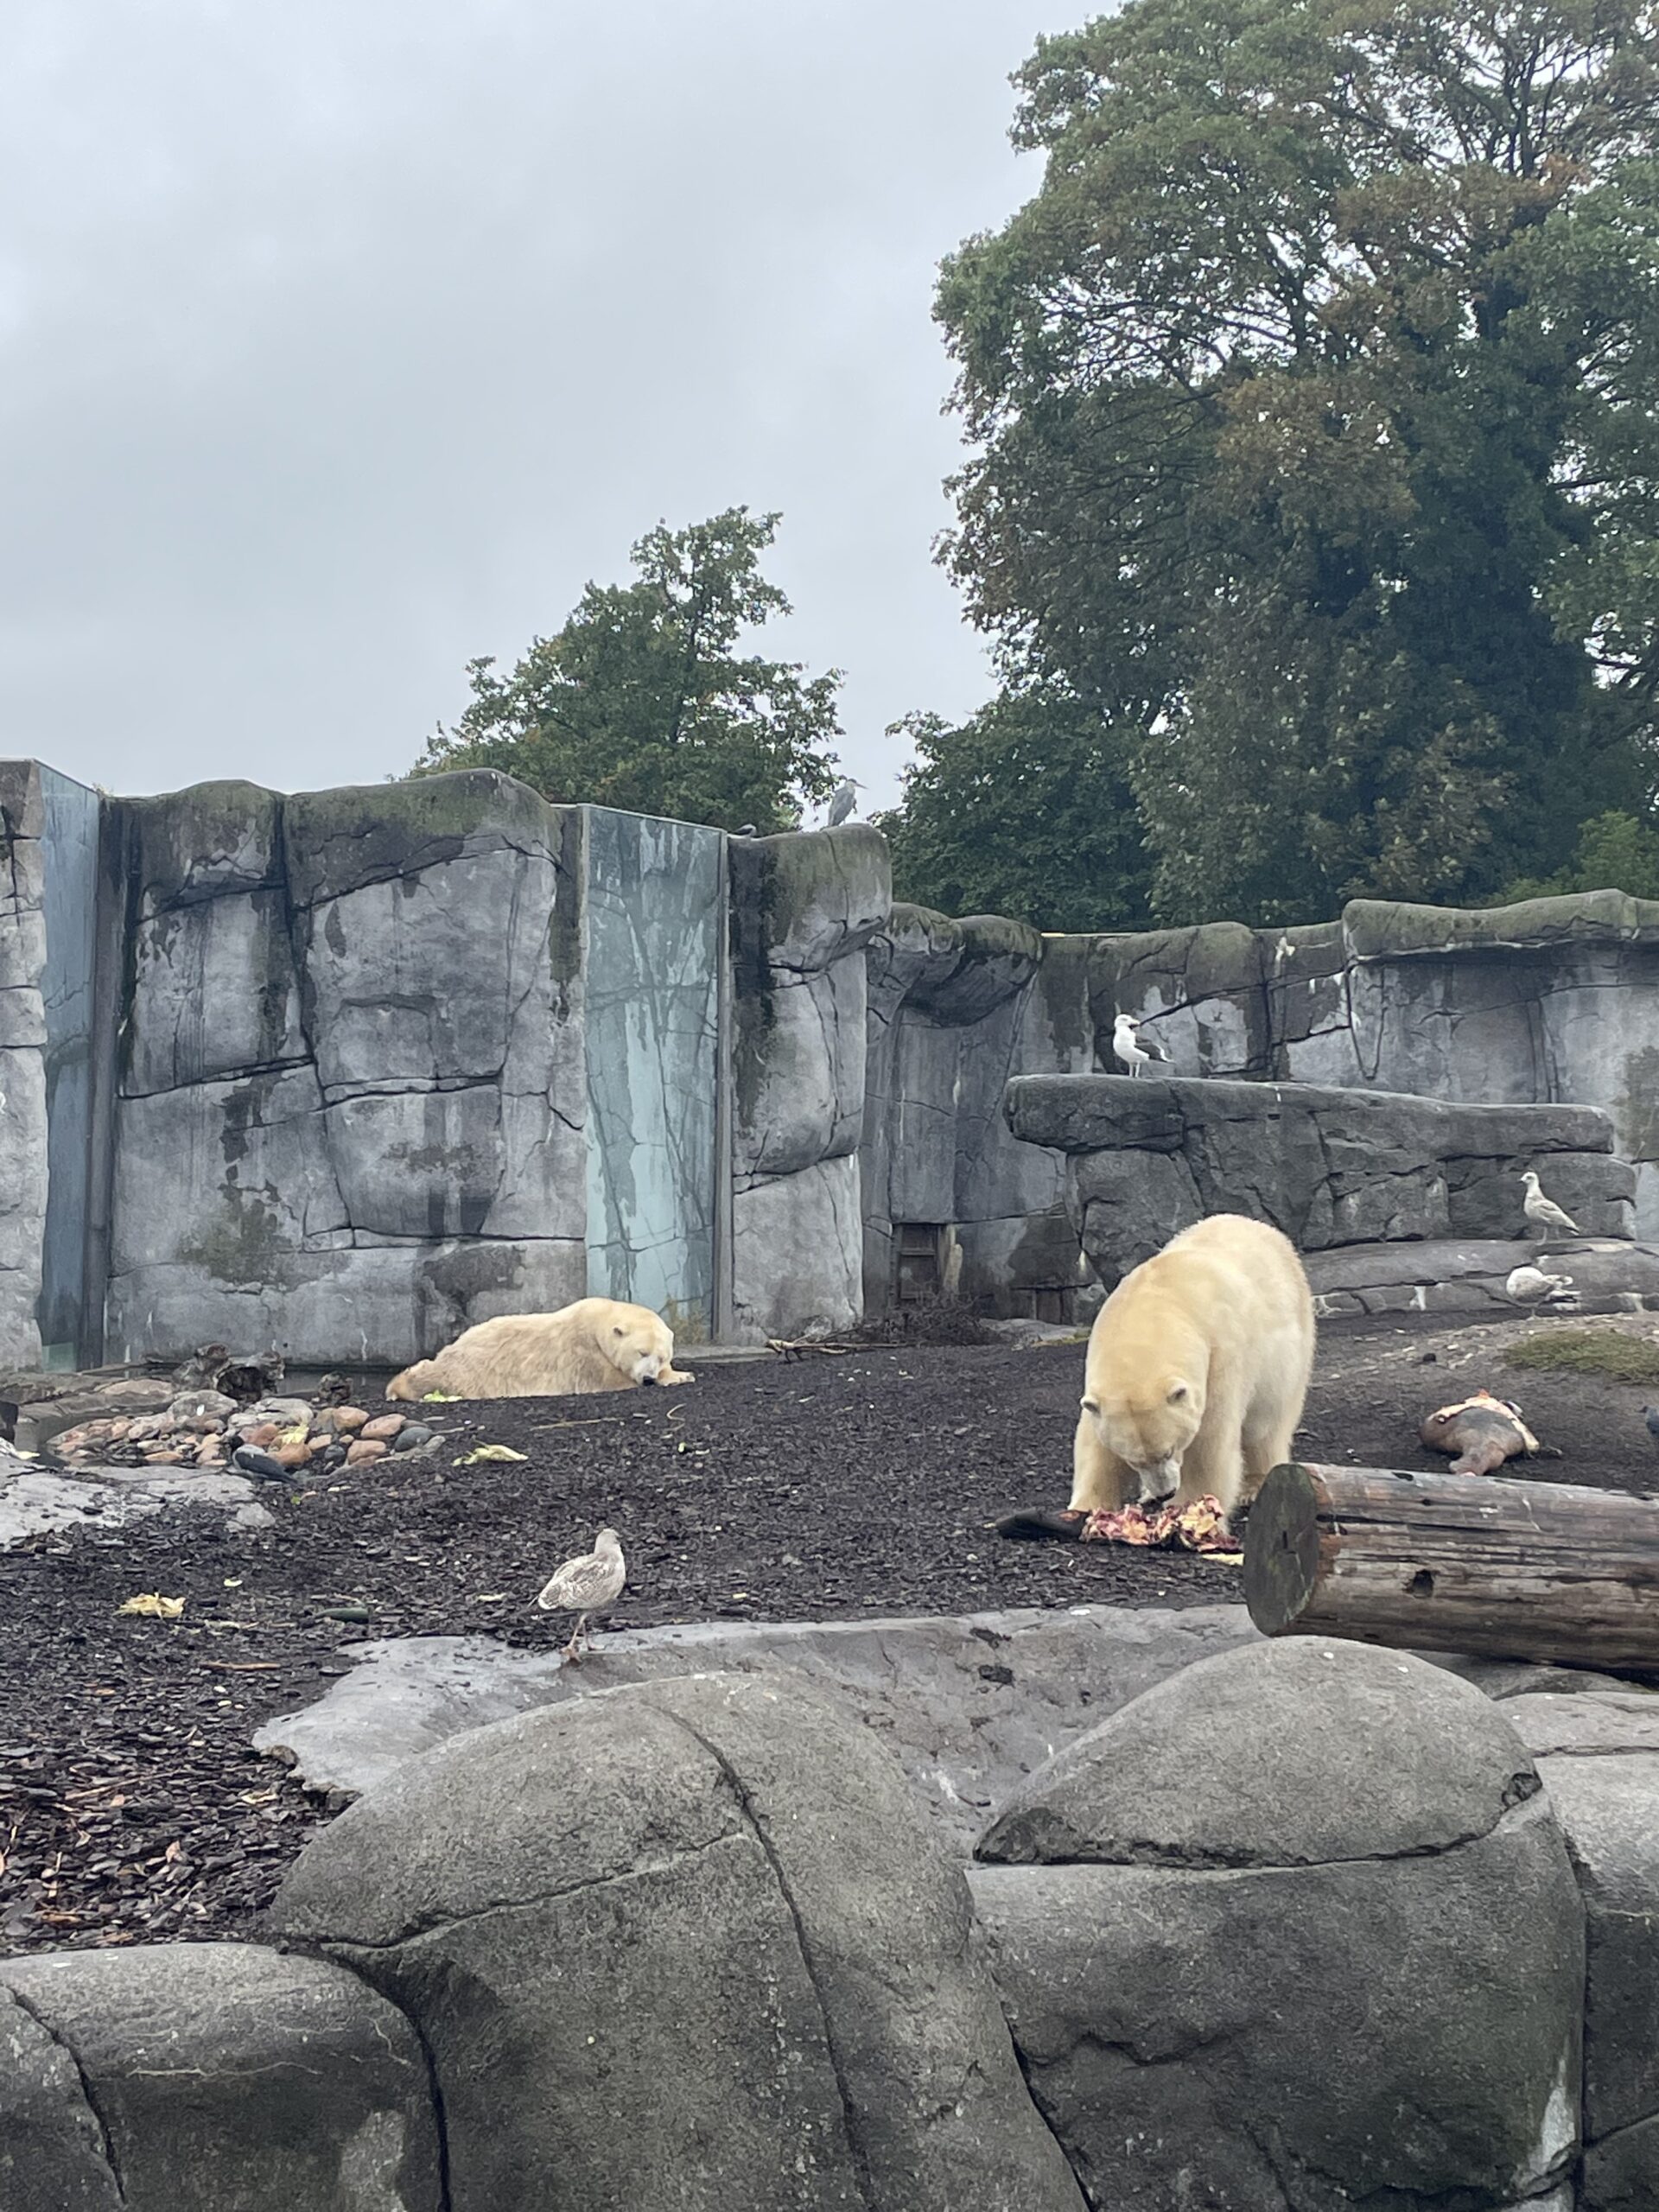 Copenhagen Zoo- Polar Bears!